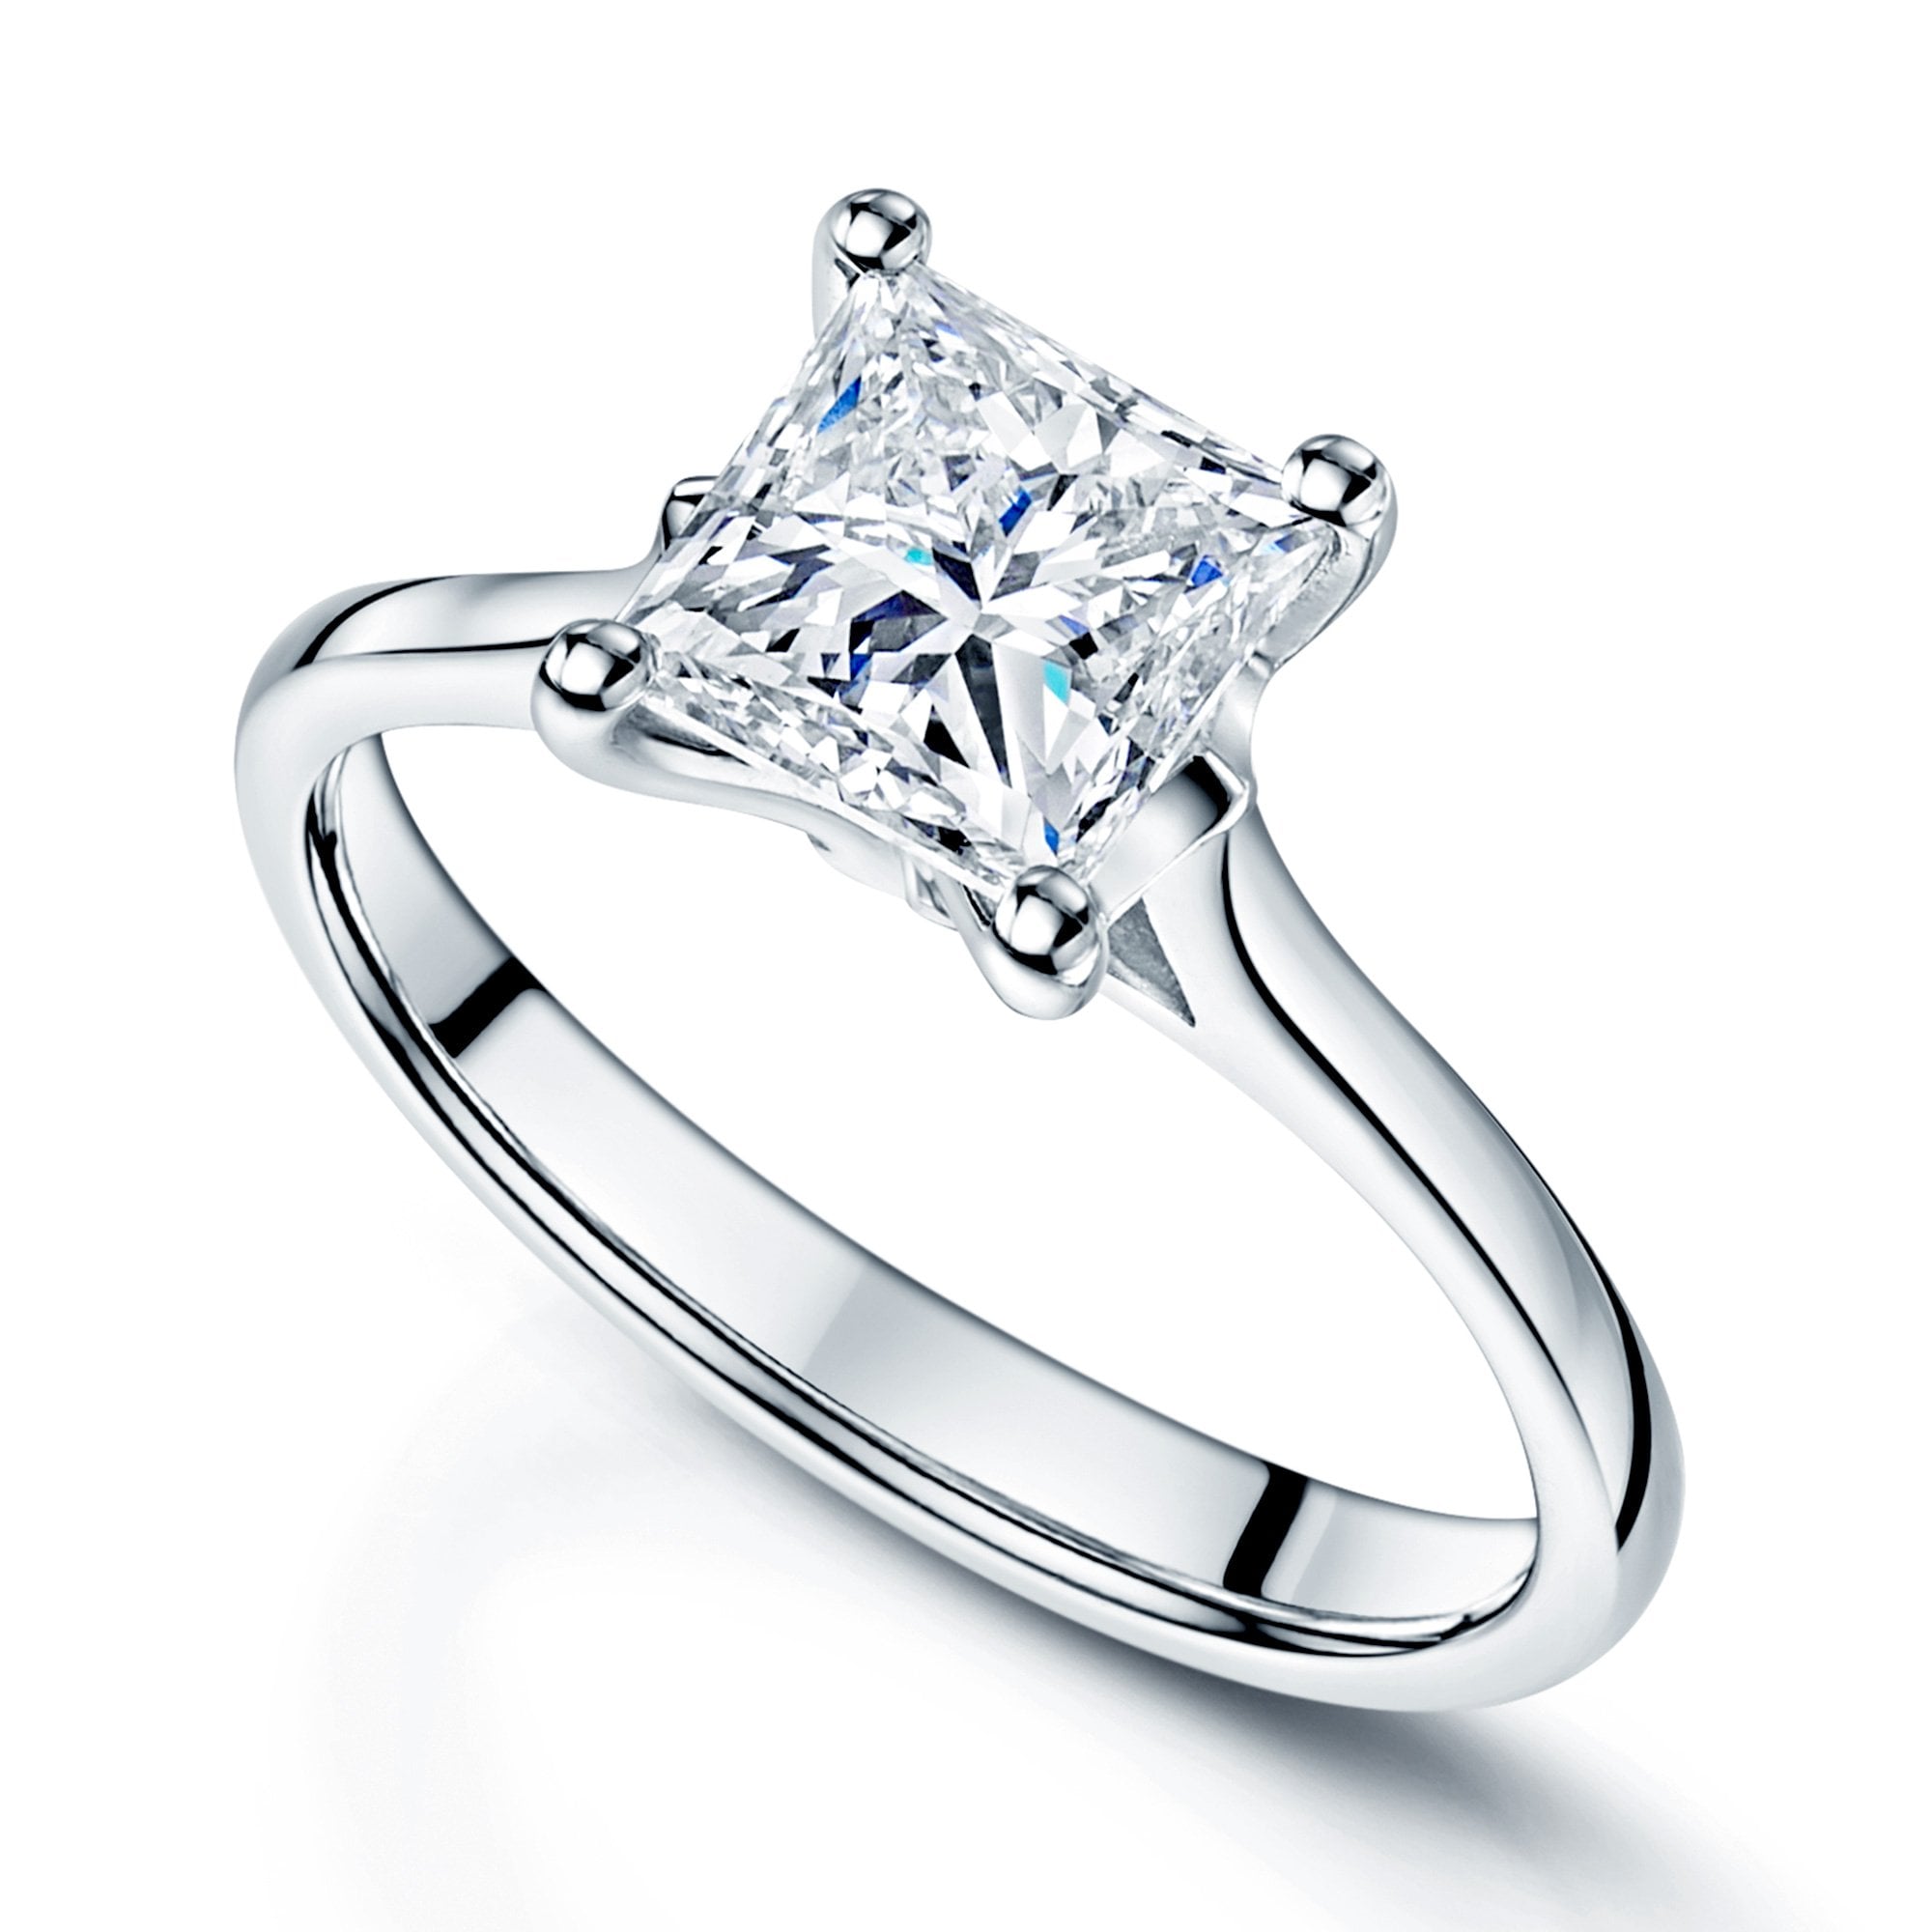 Platinum GIA Certificated Princess Cut Diamond Solitaire Ring